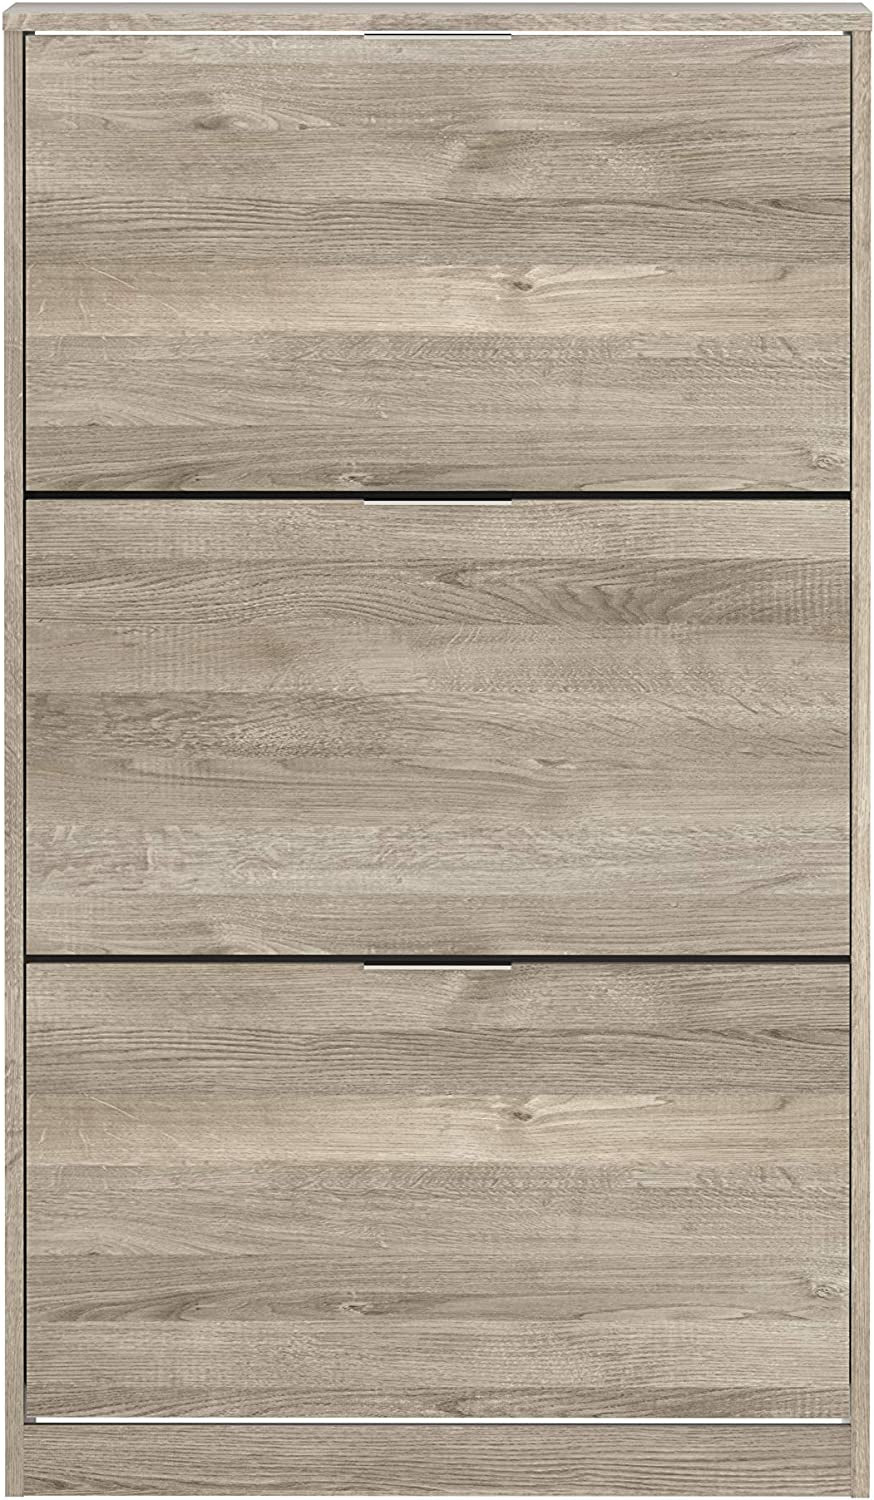 Amazon Brand -  Inari 3-Door Shoe Cabinet/Cupboard/Organizer, 25 X 75 X 128 Cm, Light Brown Oak-Effect